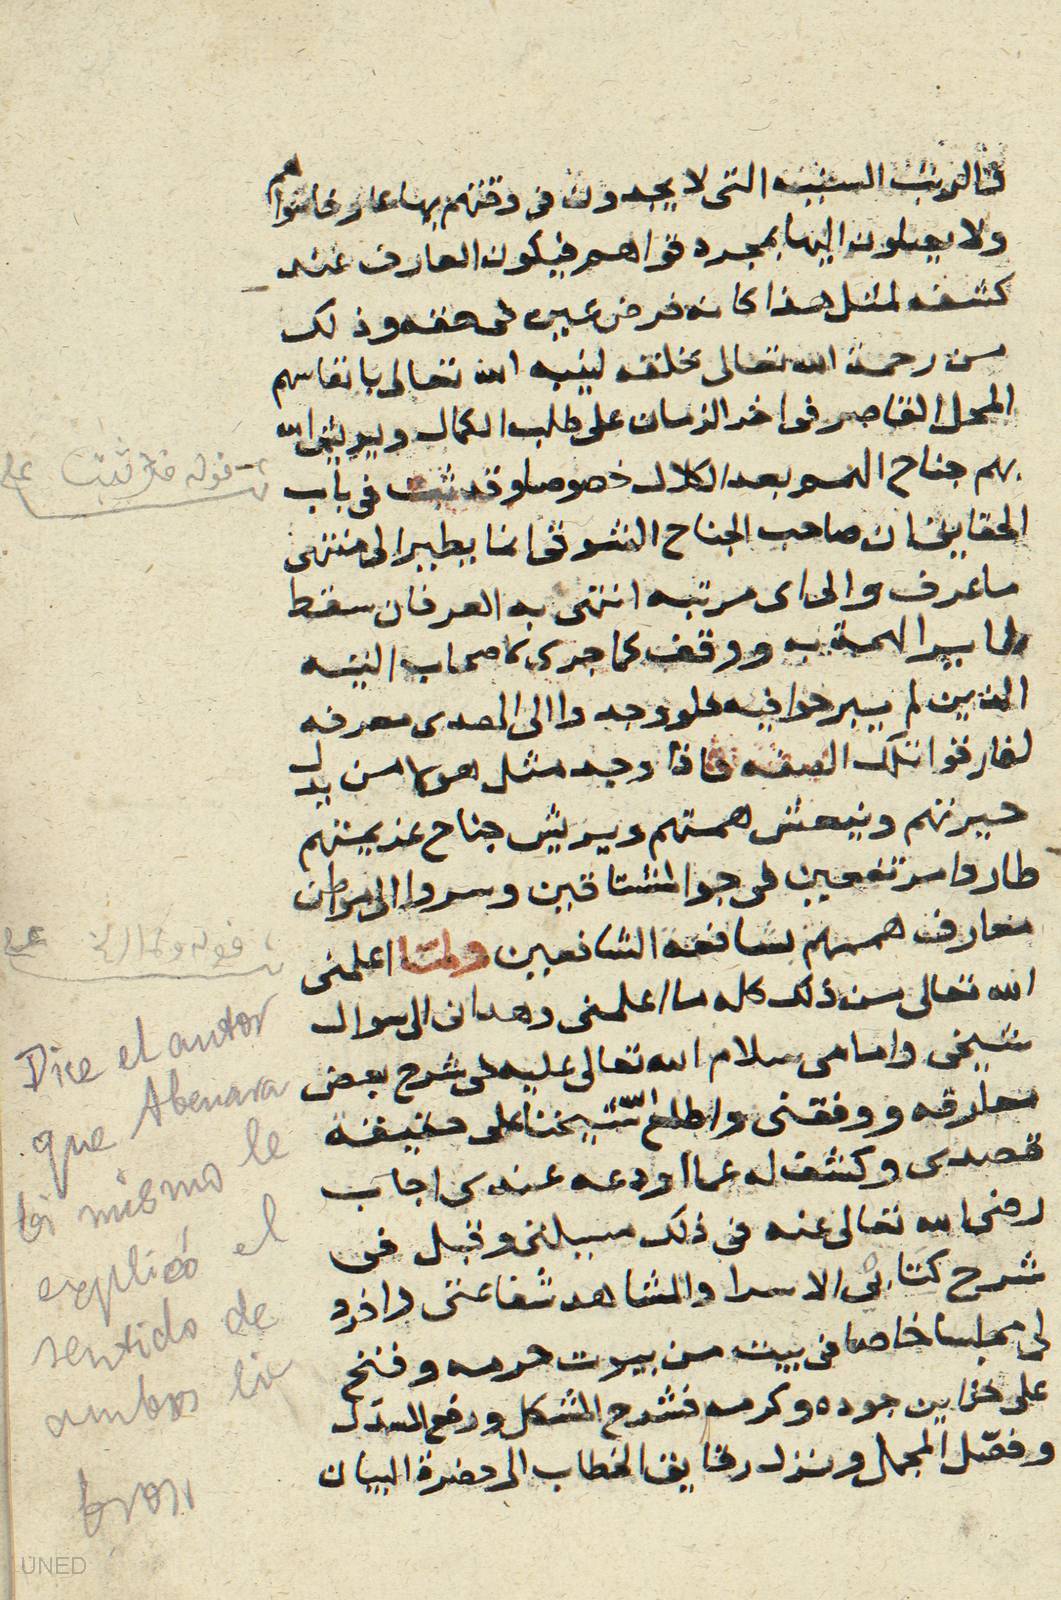 Kitab sarh al-Isra' wa-l-Masahid, anterior al siglo XIX